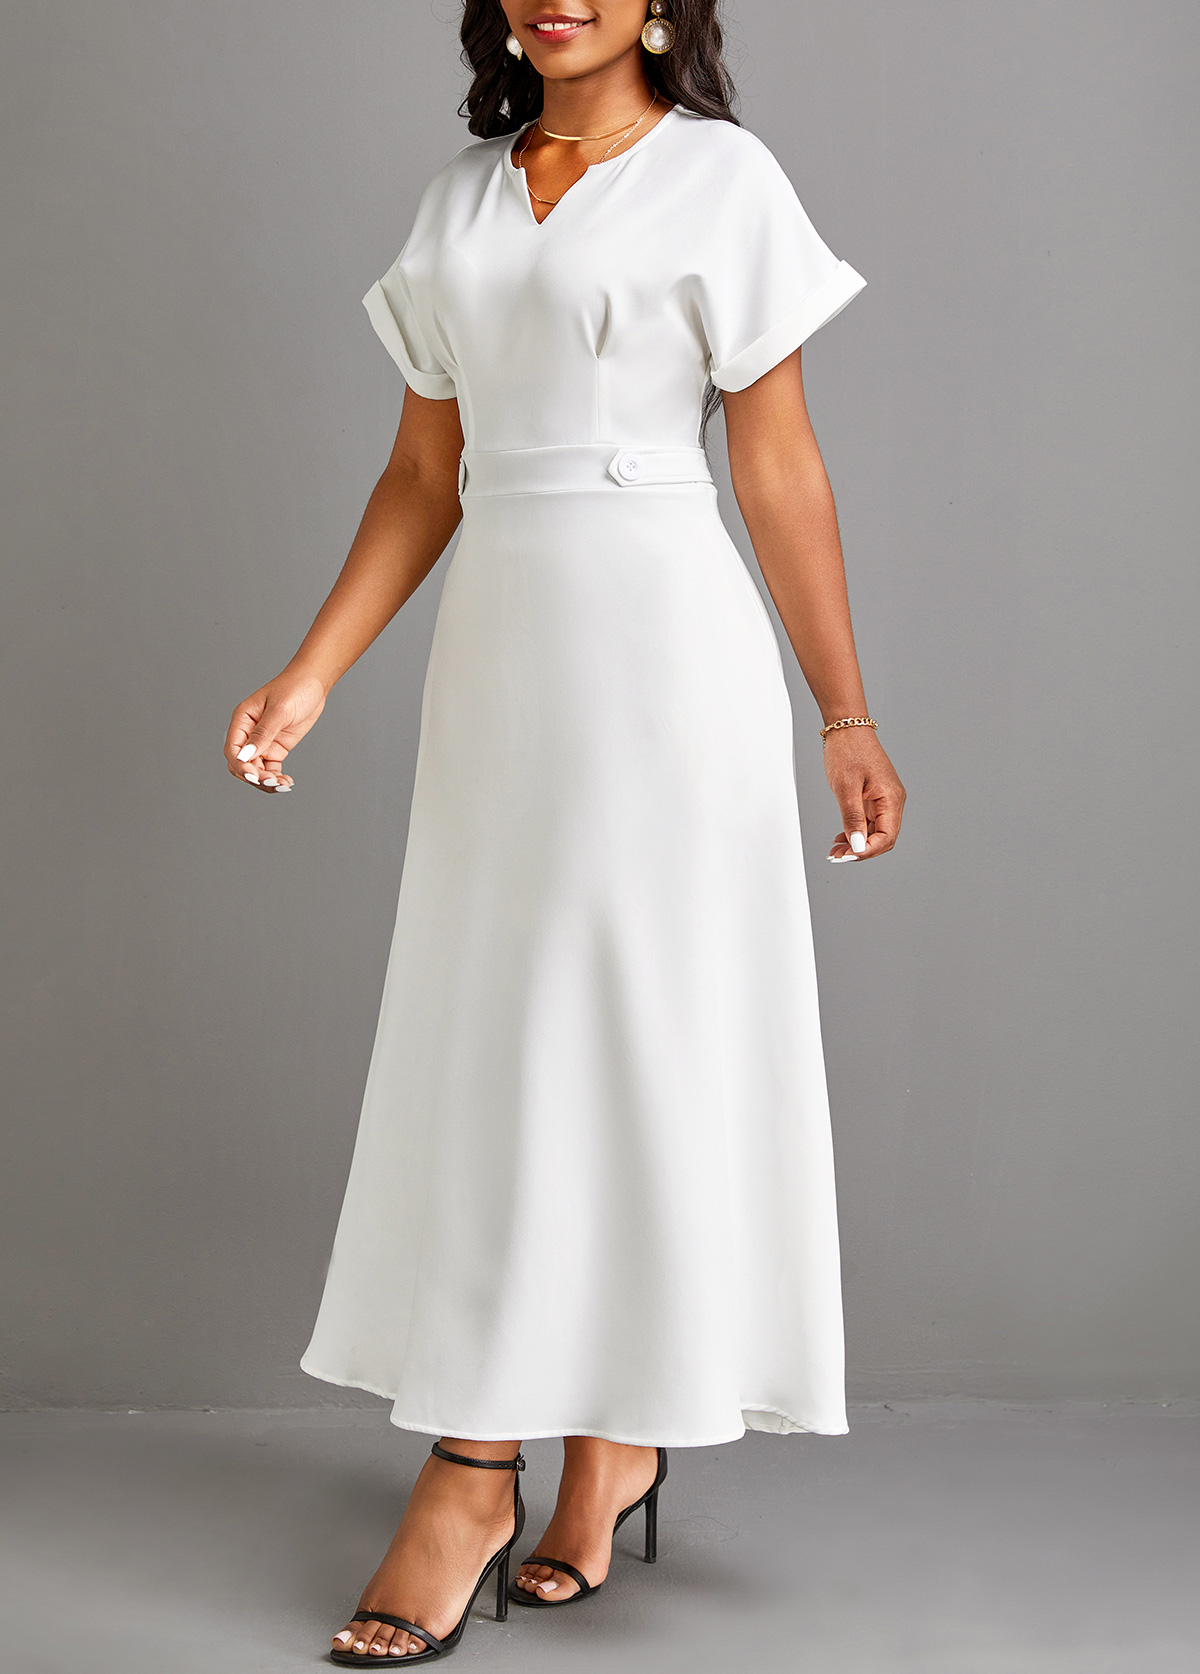 Pocket Split Neck Short Sleeve White Maxi Dress